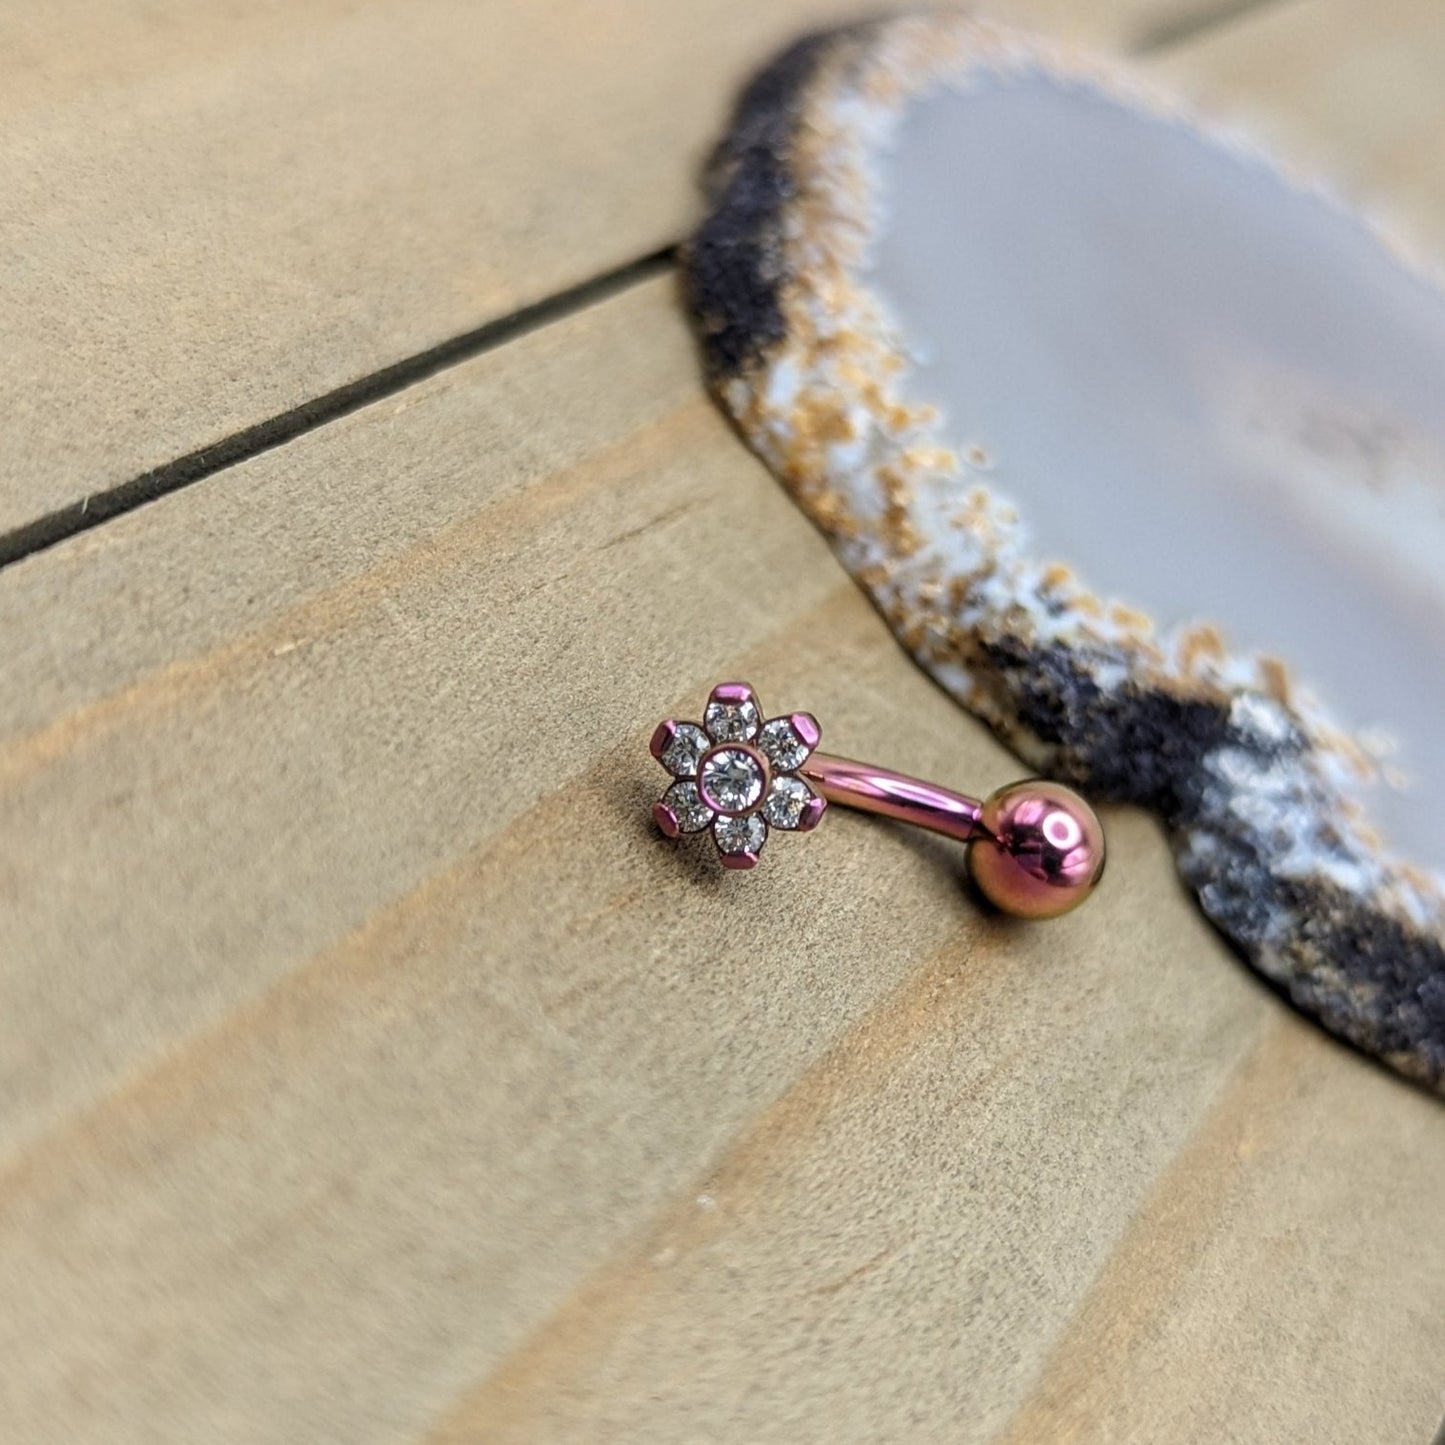 14g pink titanium anodized vch piercing barbell flower gemstone threaded end gem ball